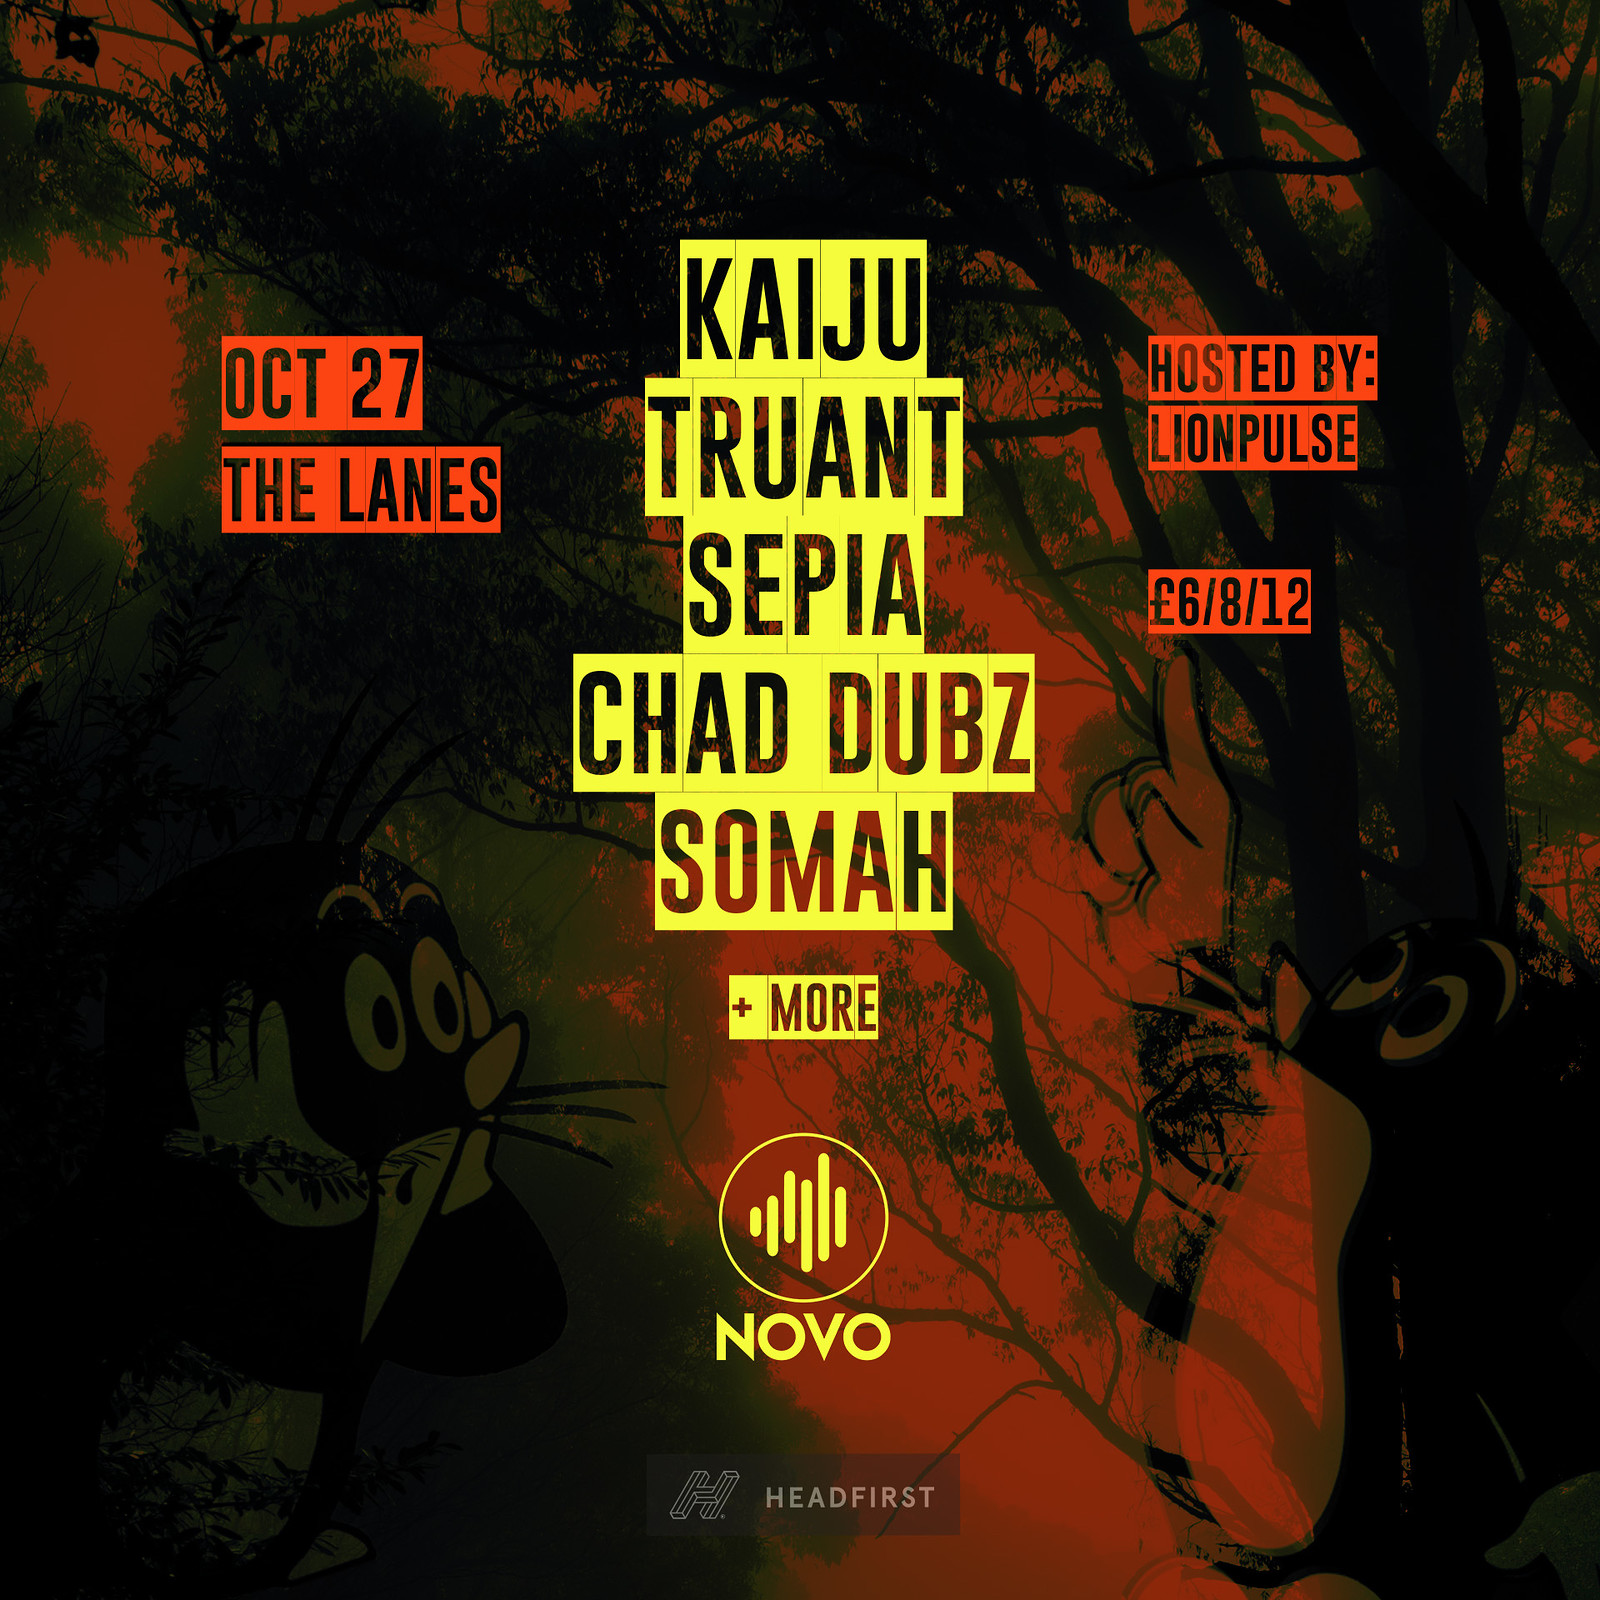 Novo Presents: KAIJU, TRUANT, SEPIA, SOMAH + MORE at The Lanes